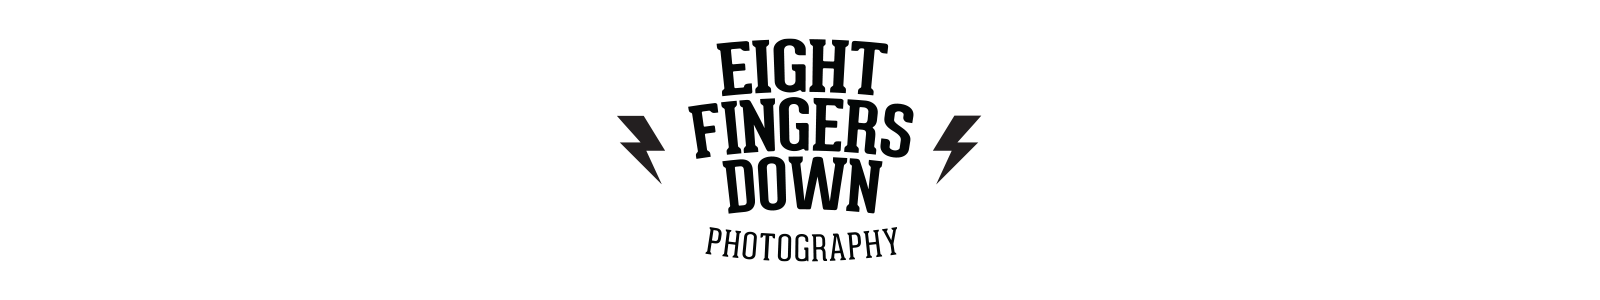 Eight Fingers Down: Photography by Matthias Schreyer